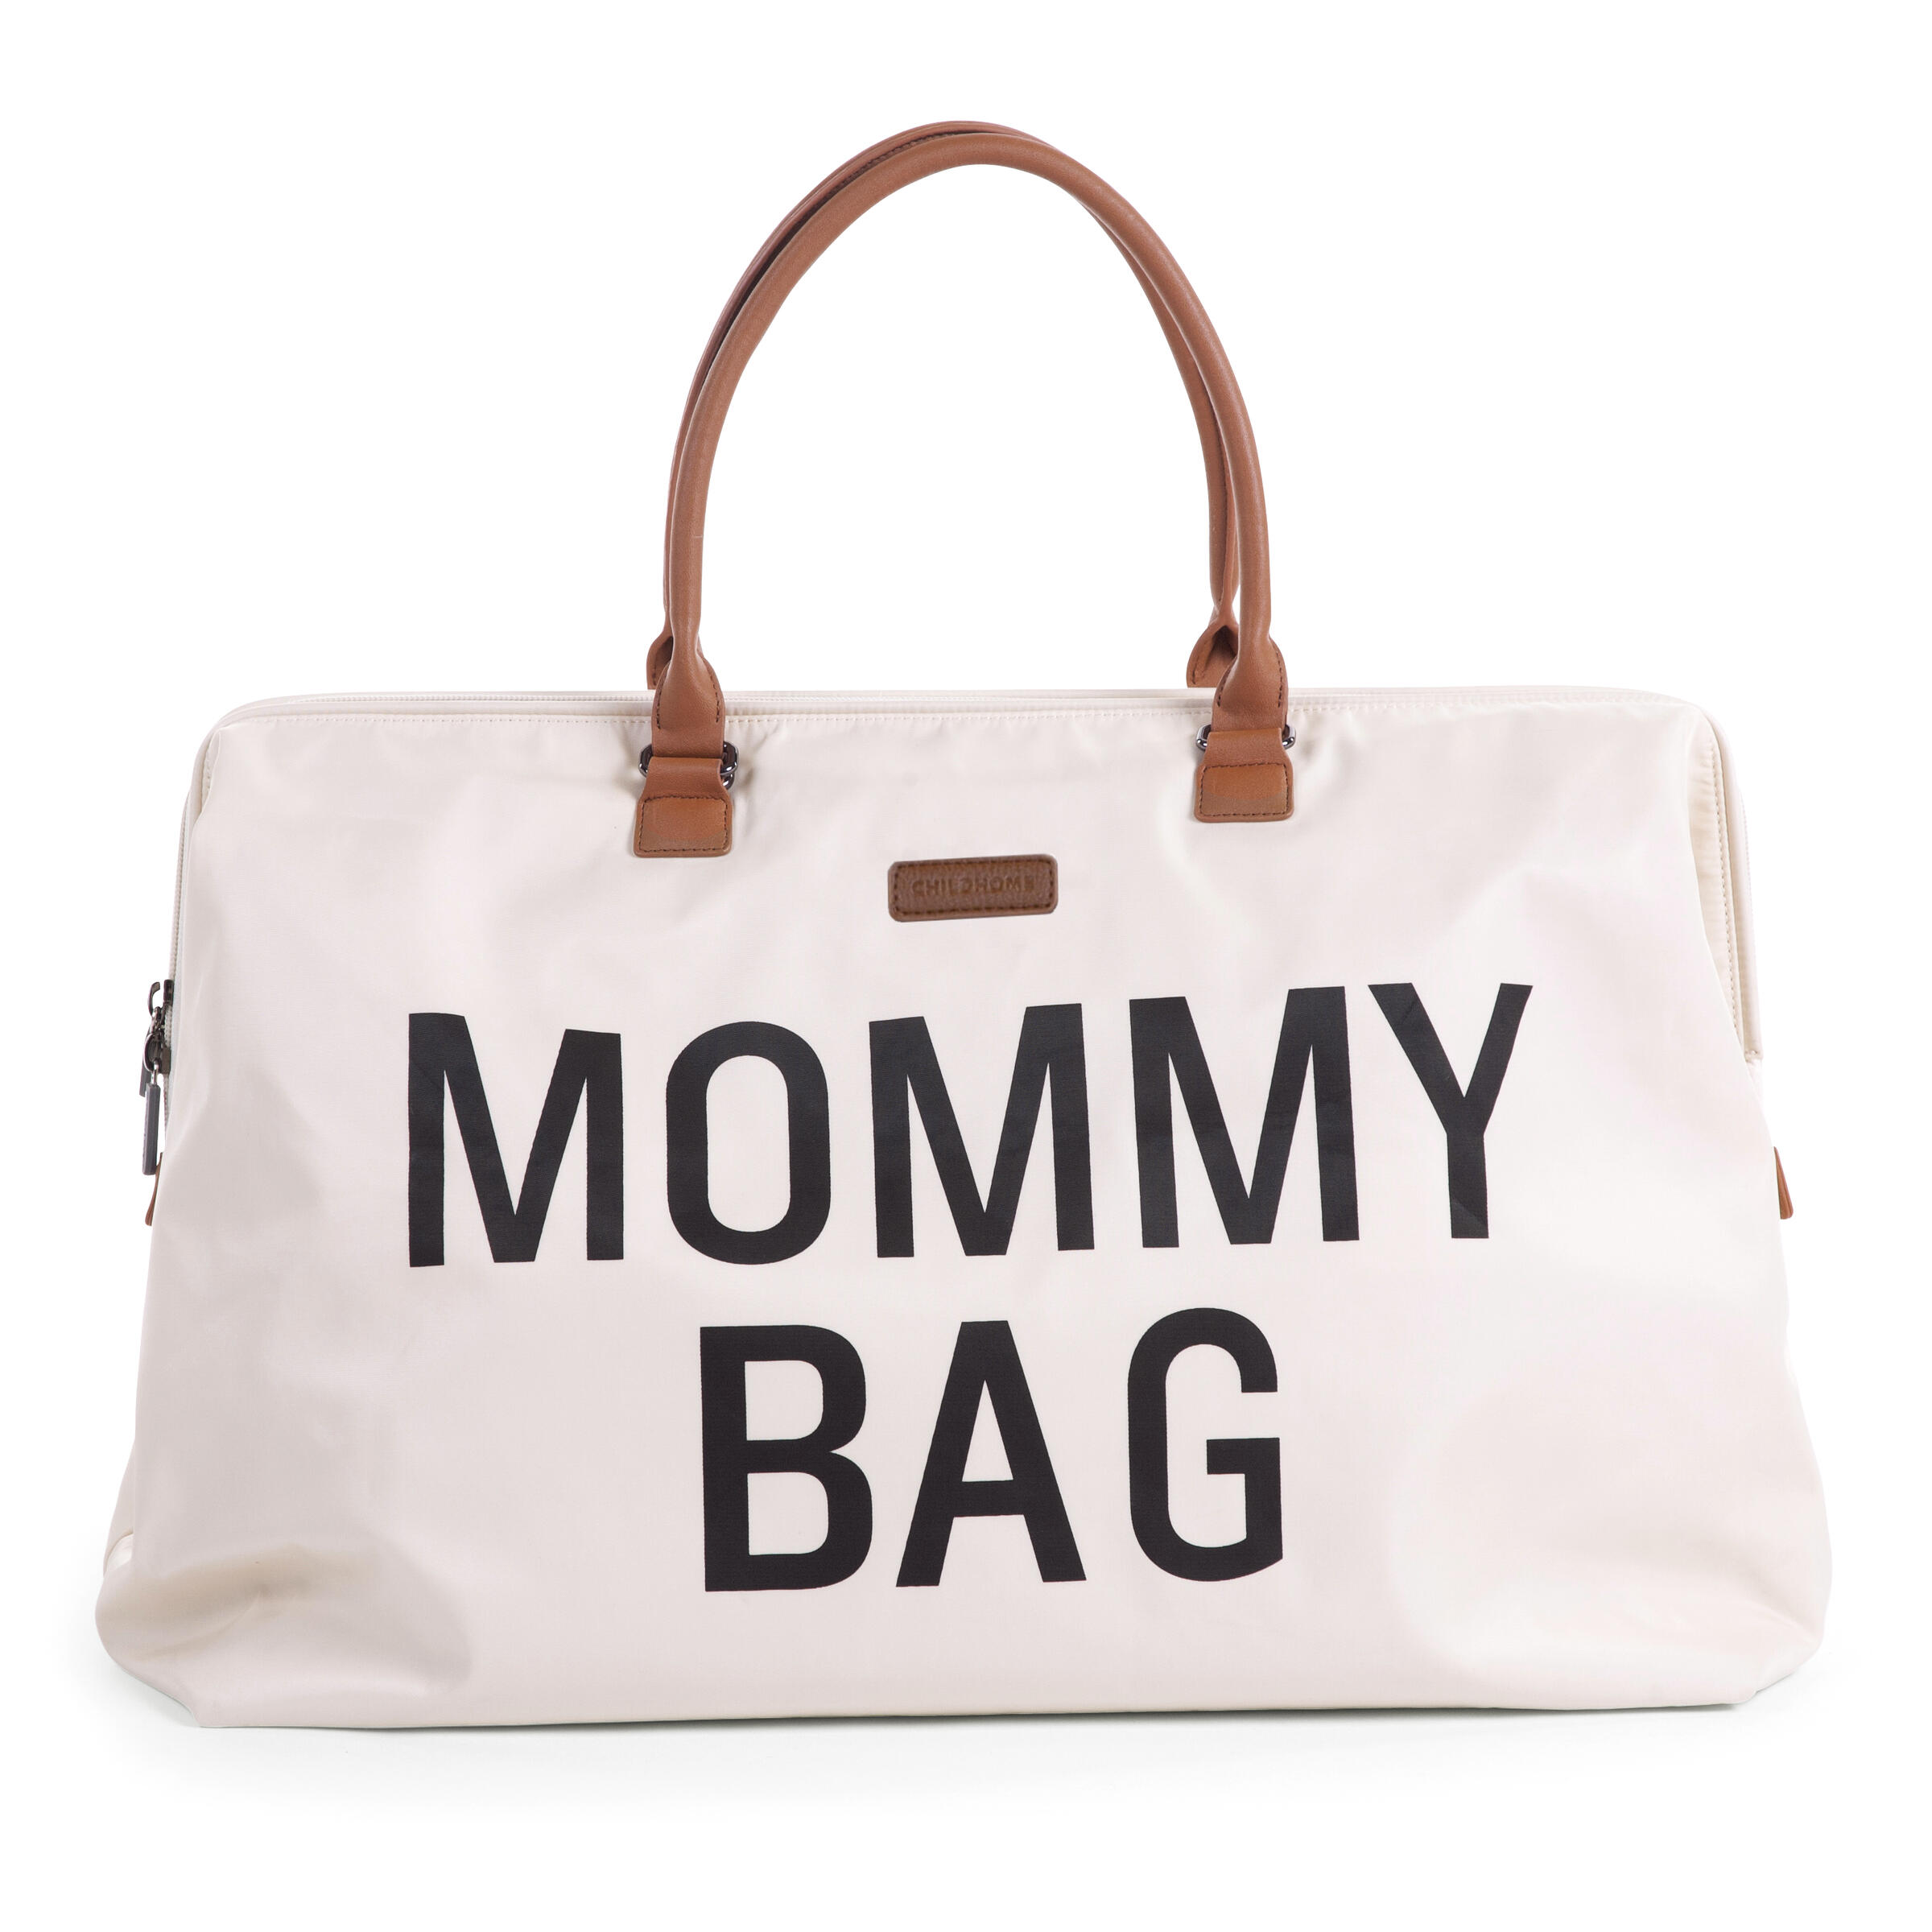 Mommy Bag Sac A Langer - Ecru Noir